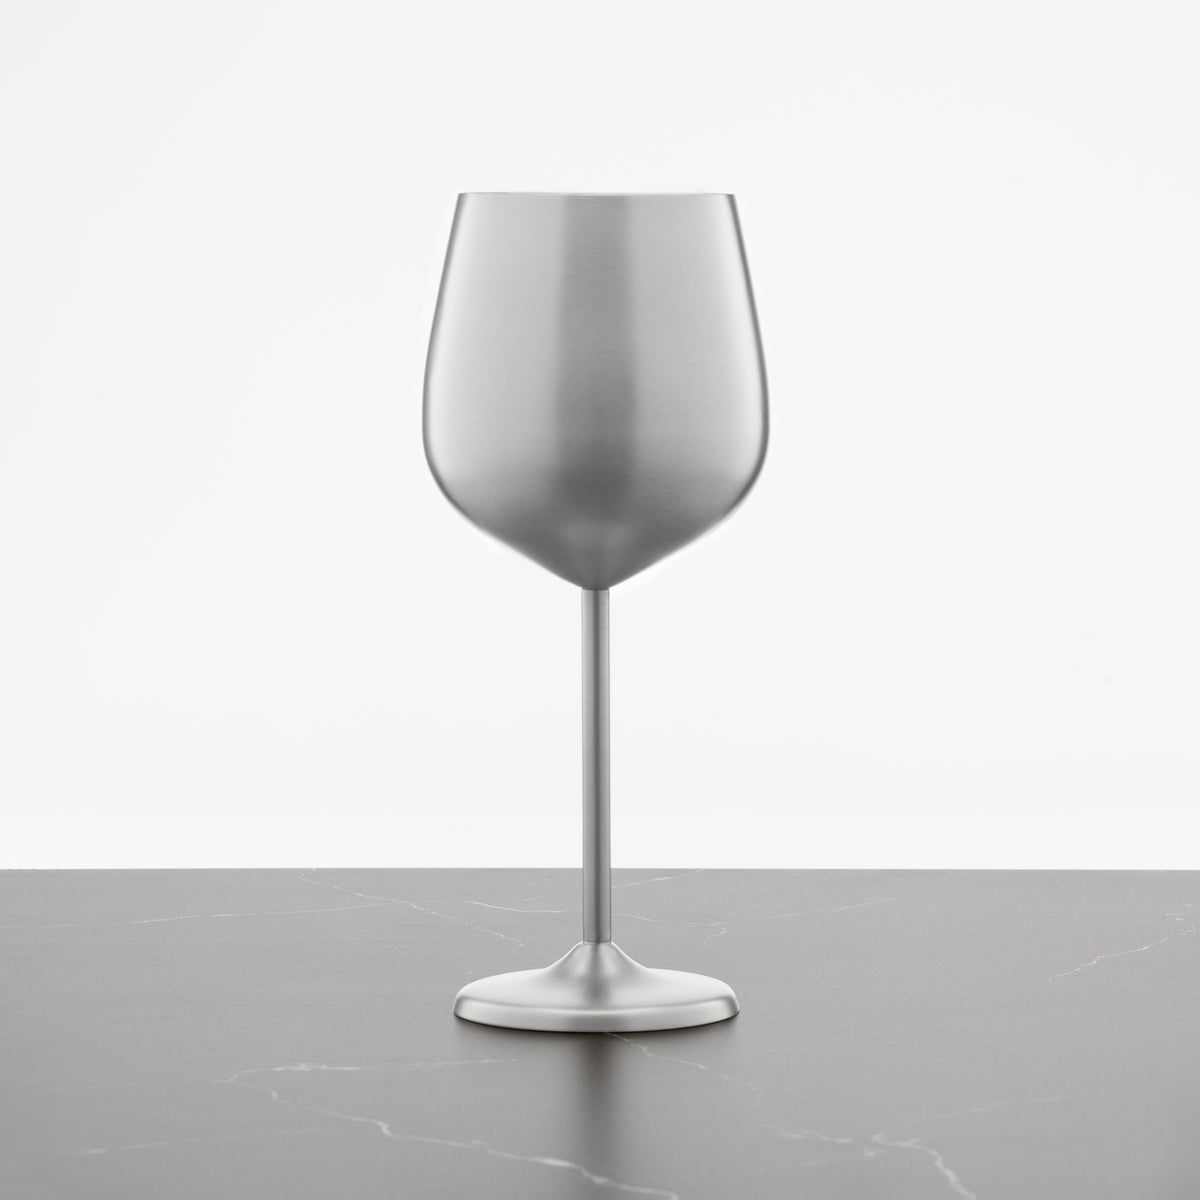 18 Oz Stainless Steel Wine Glasses, Set of 4 – Cambridge Silversmiths®